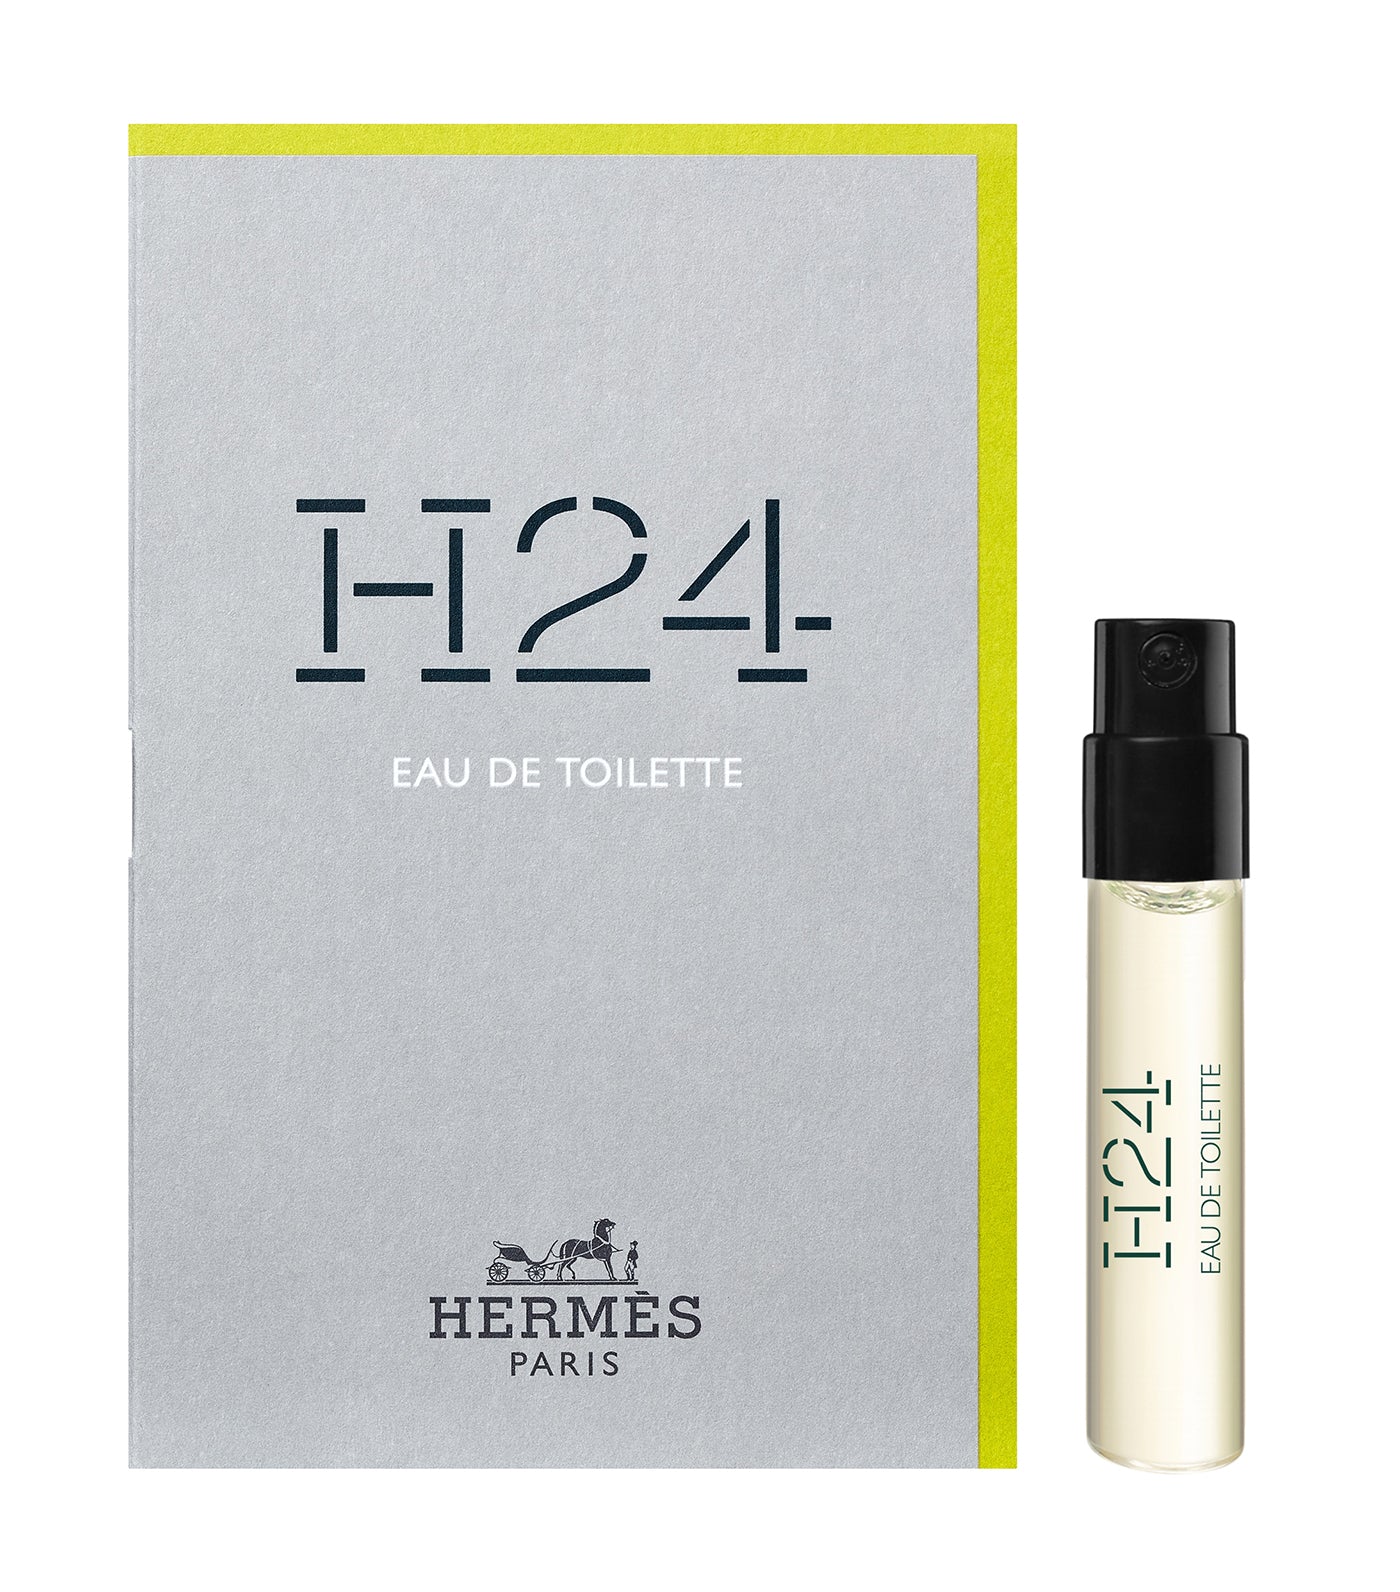 H24 moisturizing face cream